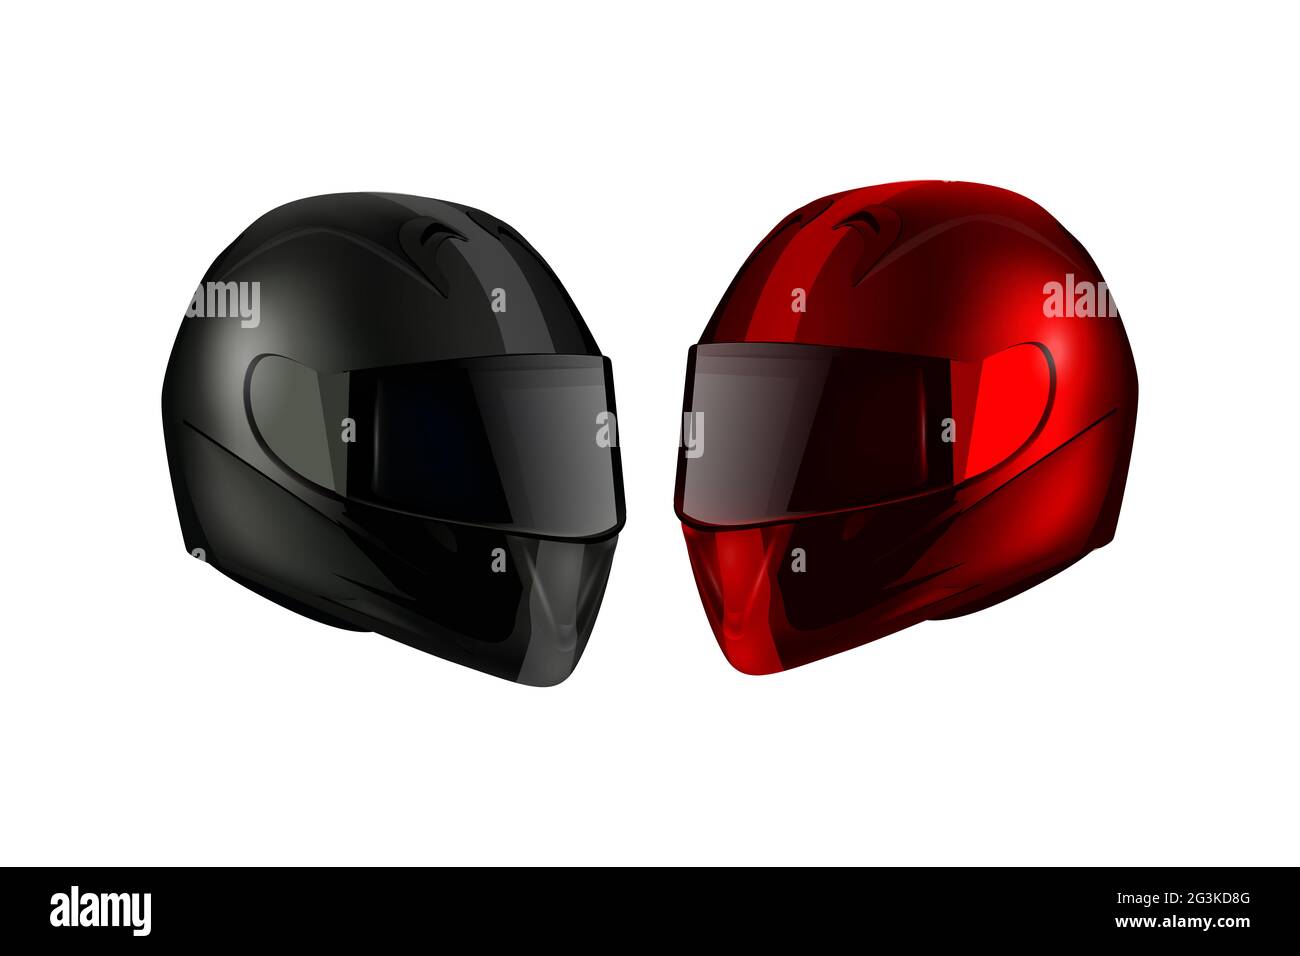 16 ideas de Casco motocicleta  casco motocicleta, cascos de moto, cascos